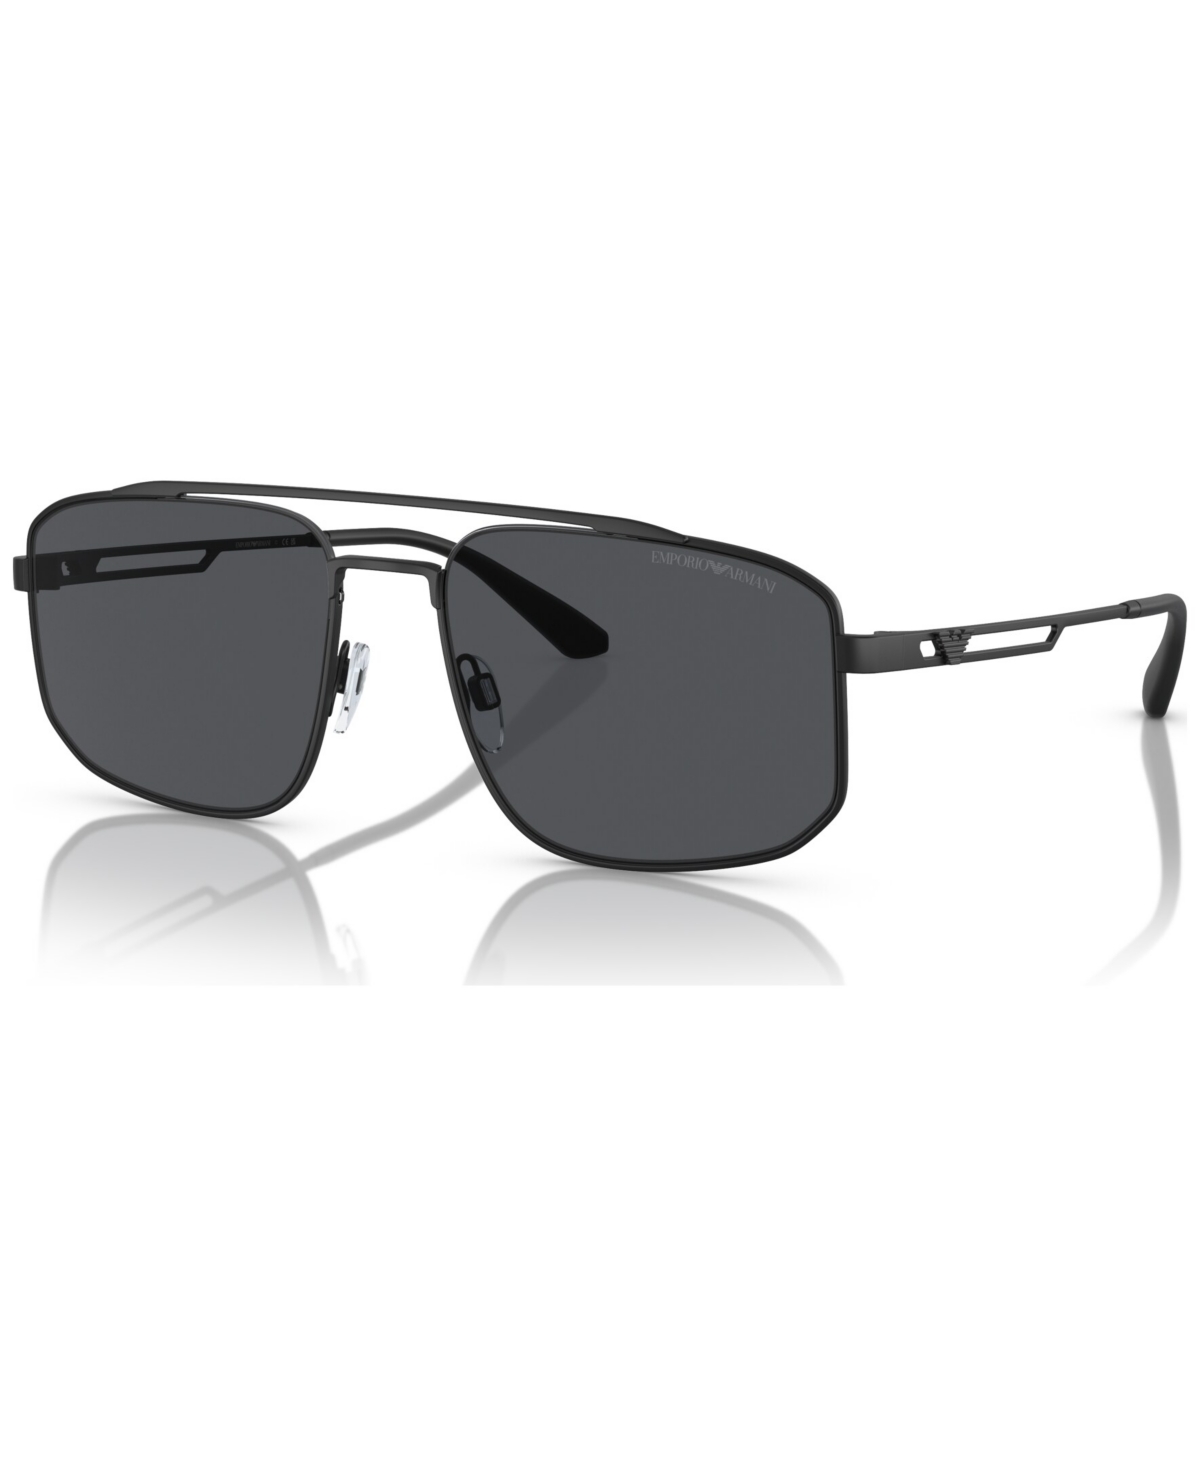 Men's Sunglasses, EA2139 - Matte Black